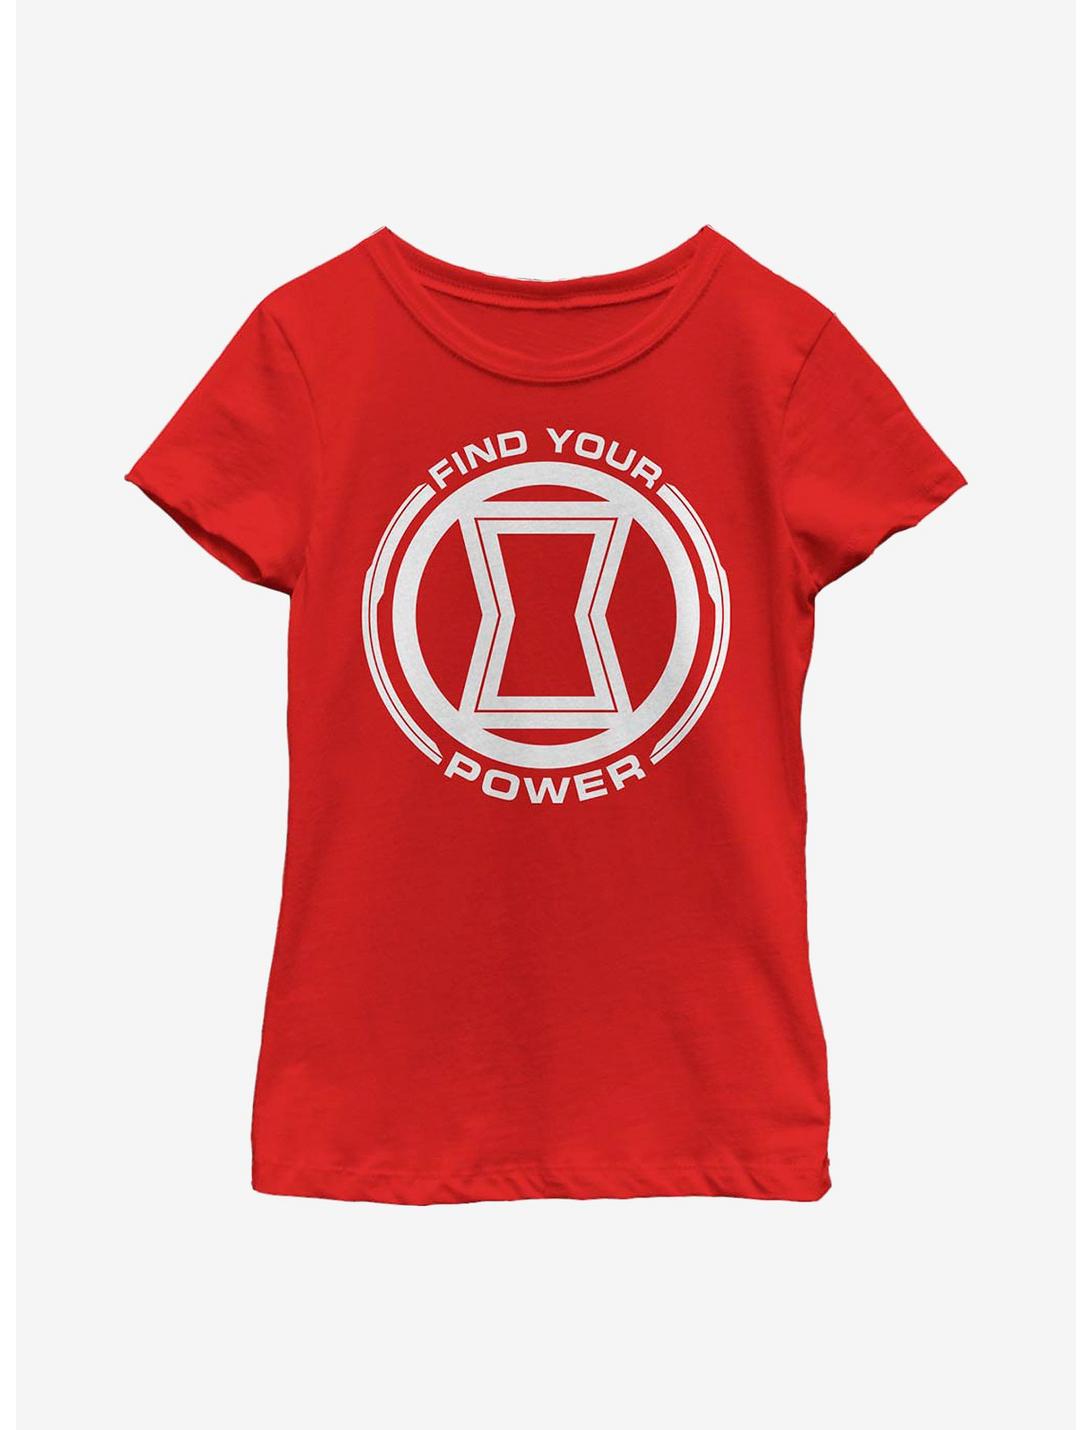 Marvel Black Widow Power Of Black Widow Youth Girls T-Shirt, RED, hi-res